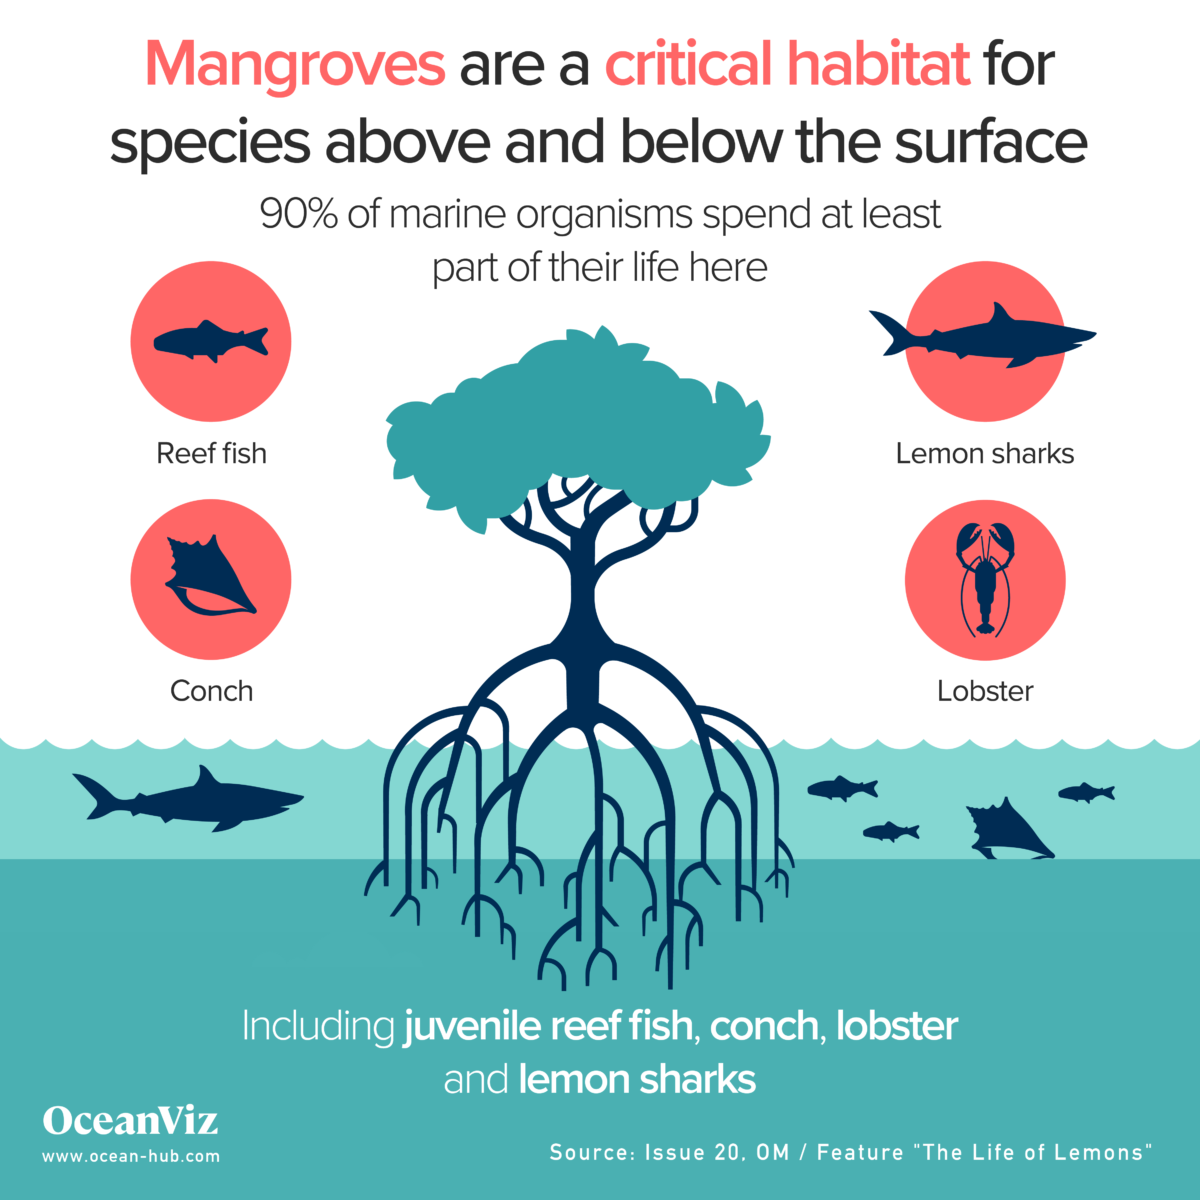 Mangroves are critical habitats